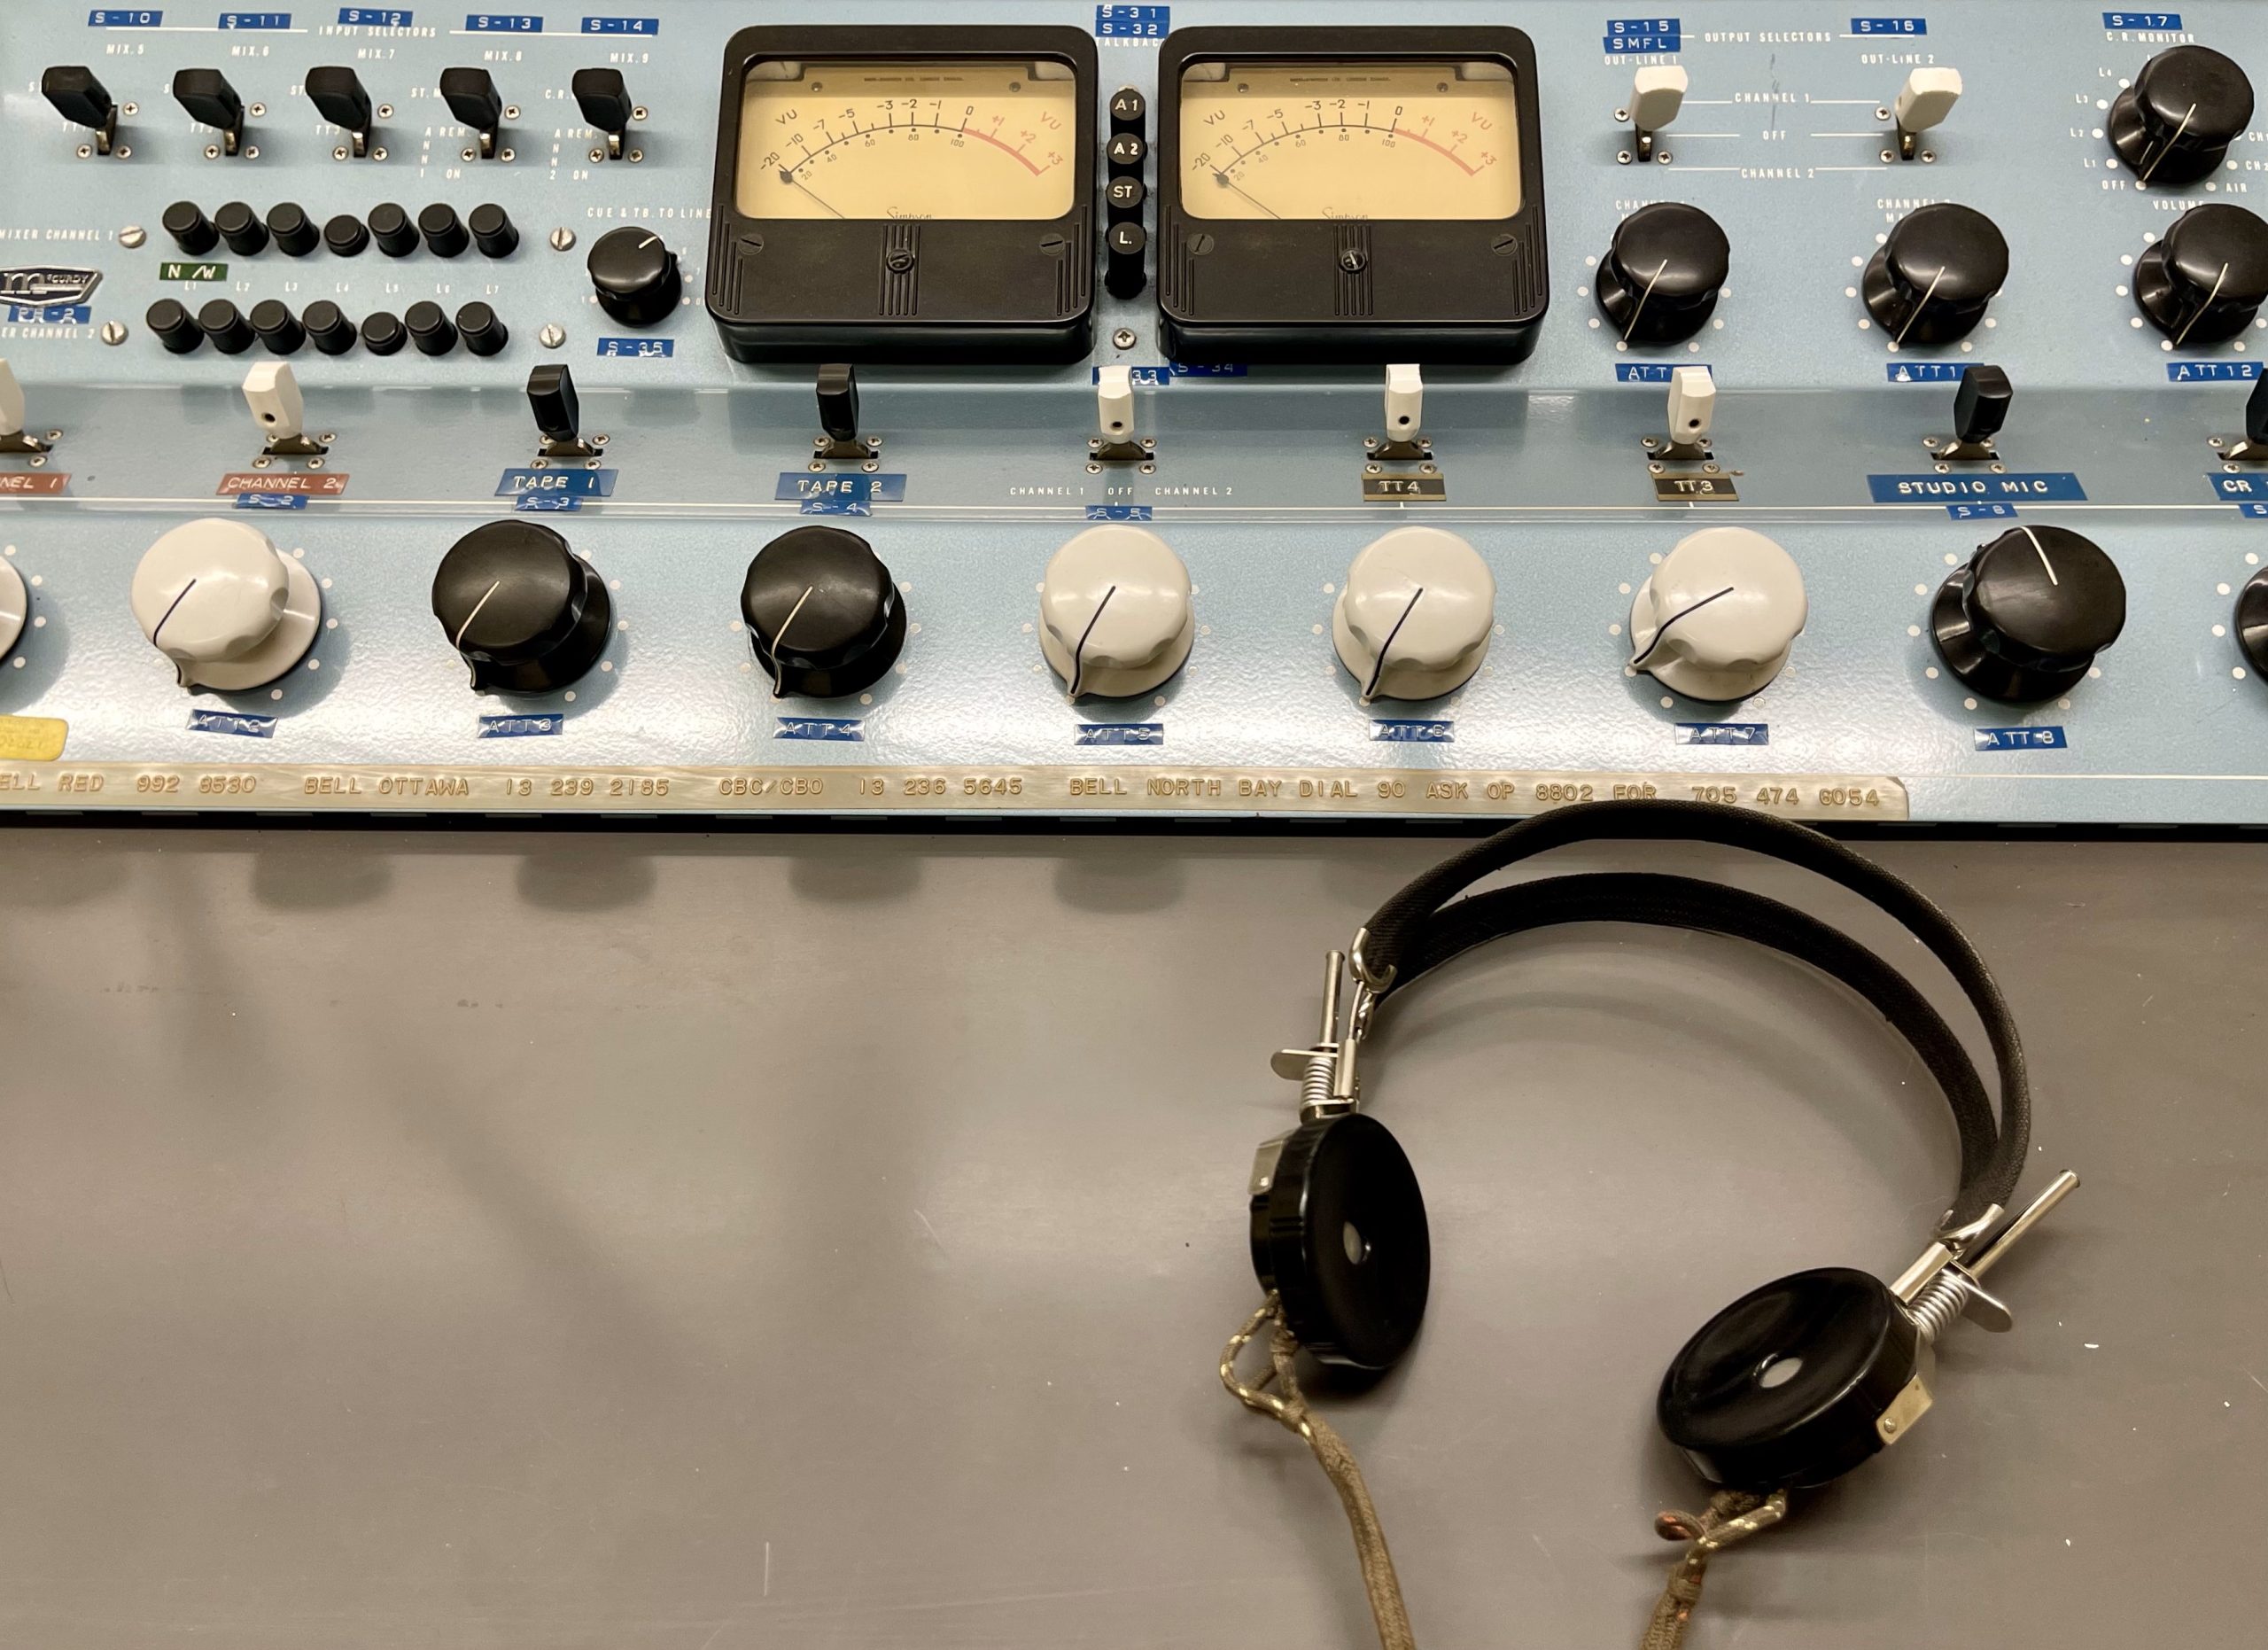 Headphones resting inside the Diefenbunker's CBC Radio Room. 